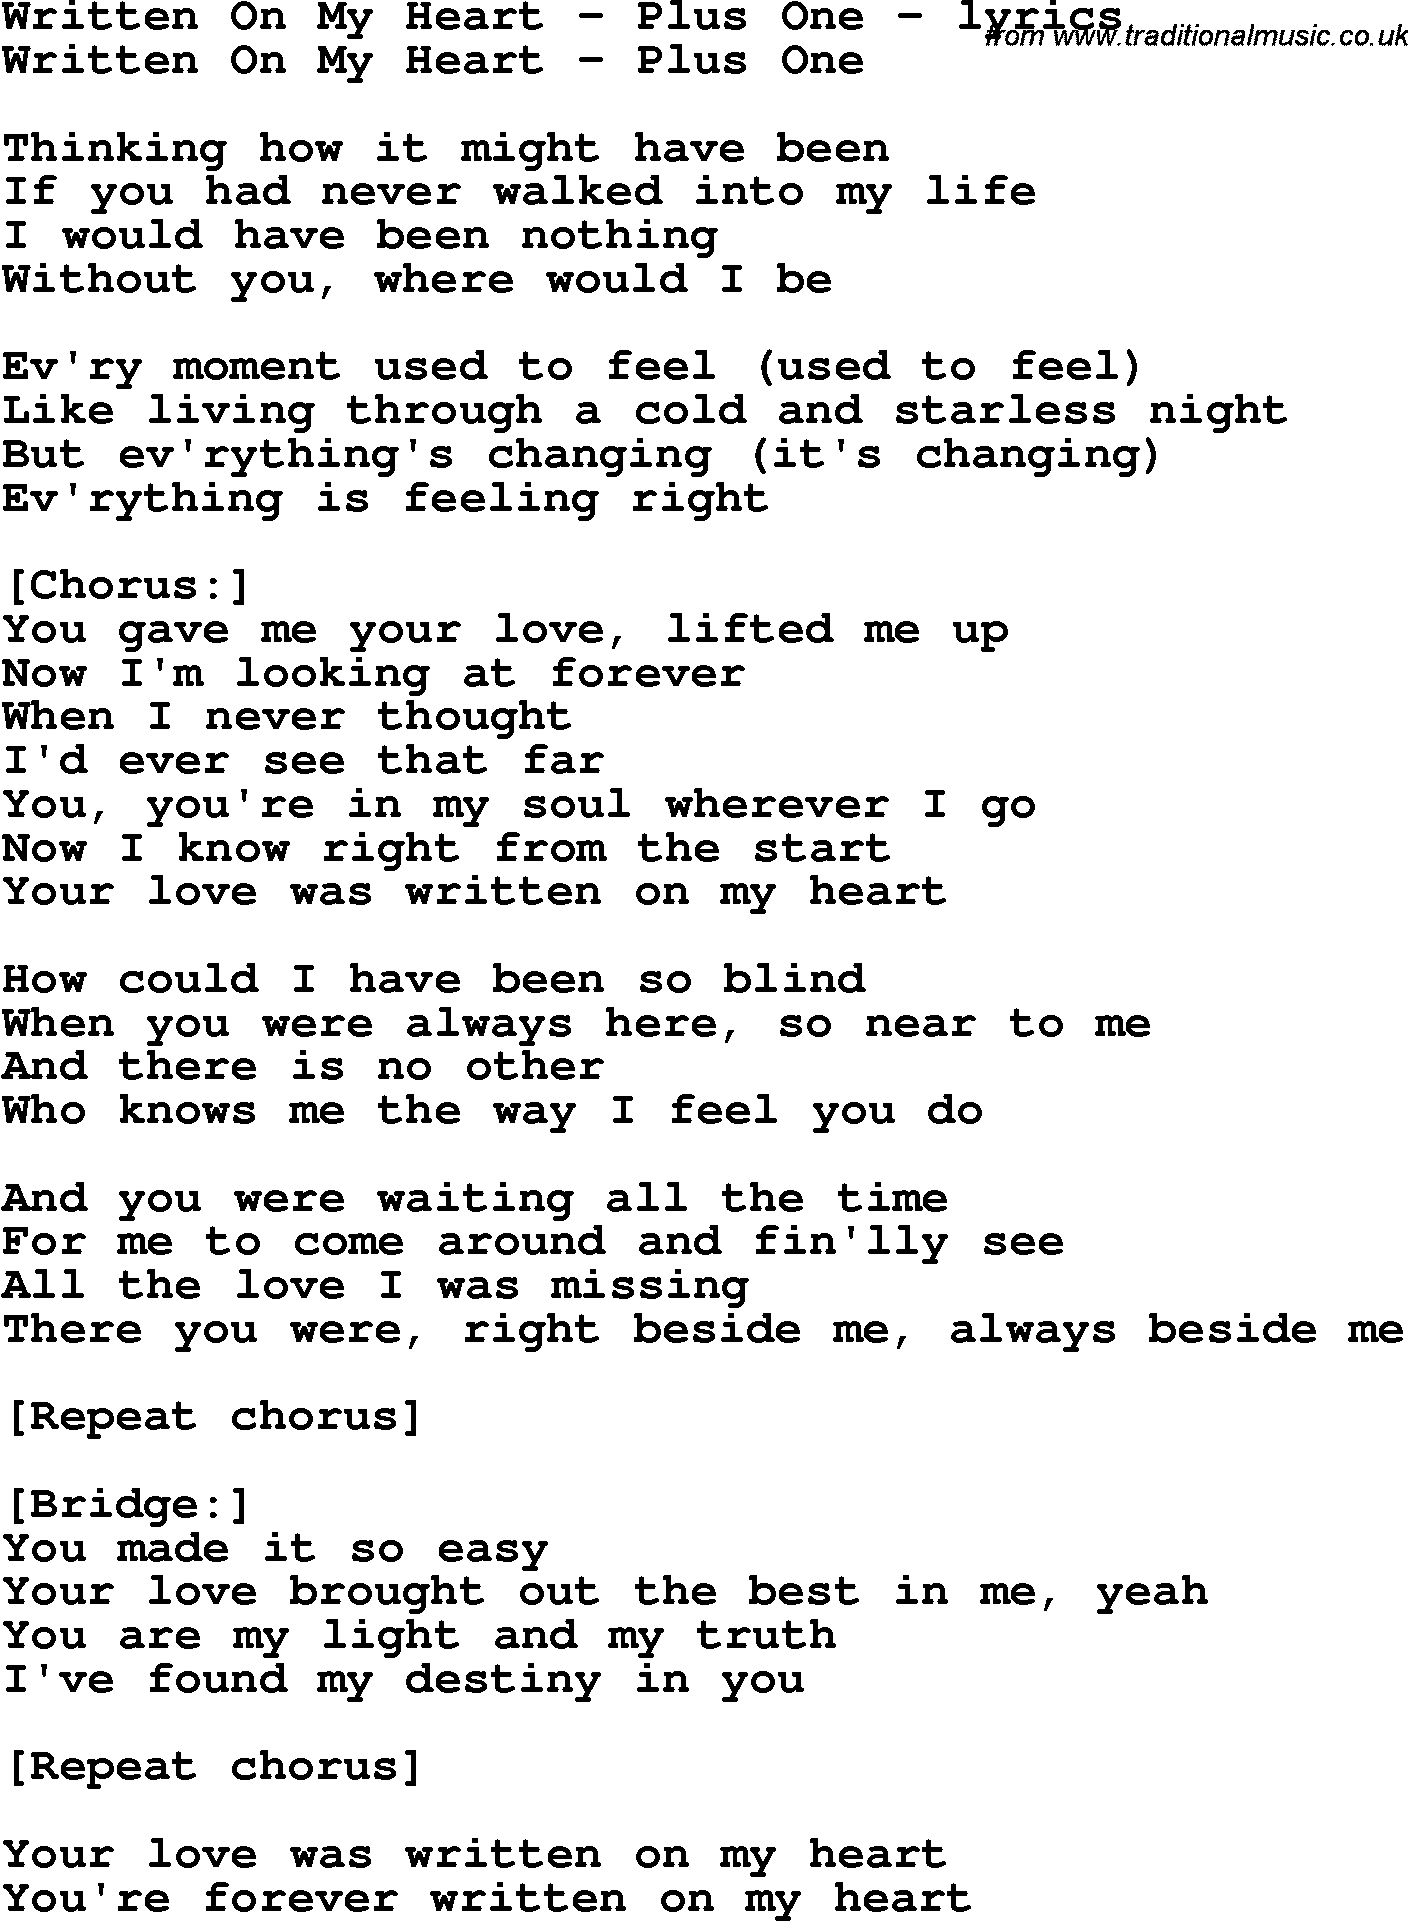 Love Song Lyrics for: Written On My Heart - Plus One